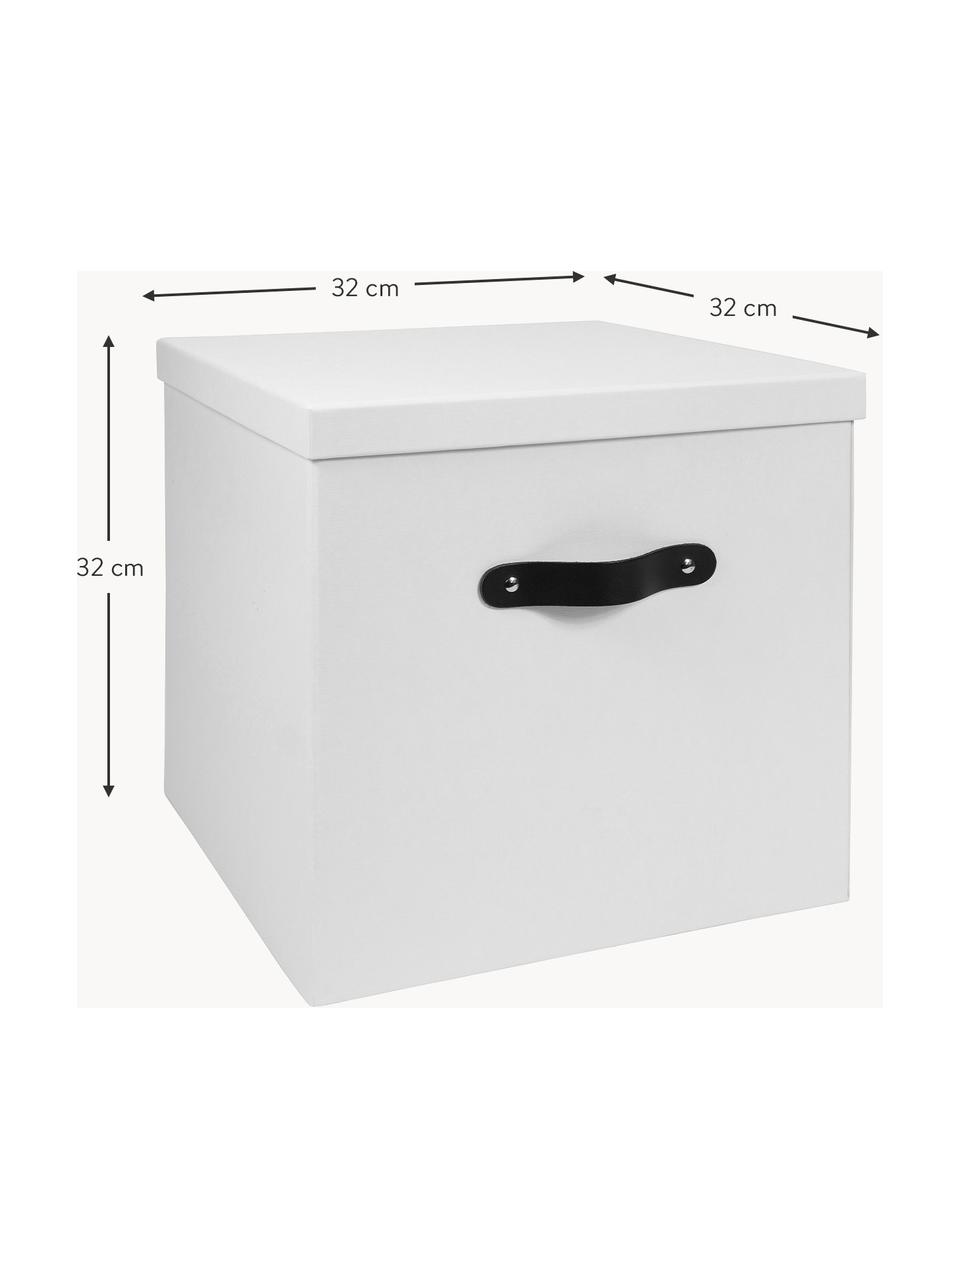 Aufbewahrungsbox Texas, Box: Fester, laminierter Karto, Griff: Leder, Weiß, B 32 x H 32 cm